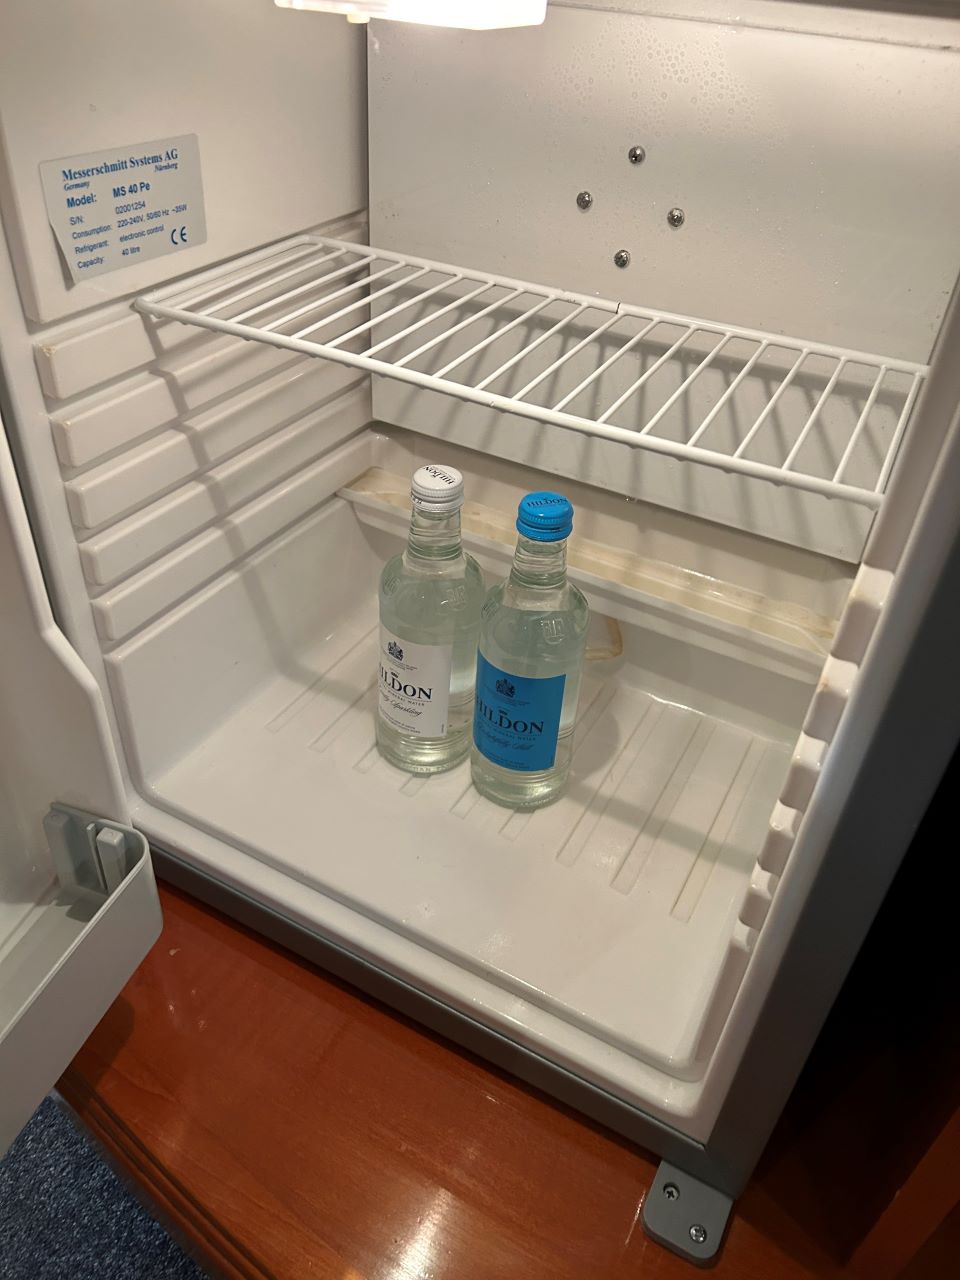 Hildon water in Sunborn London Yacht Hotel Refrigerator